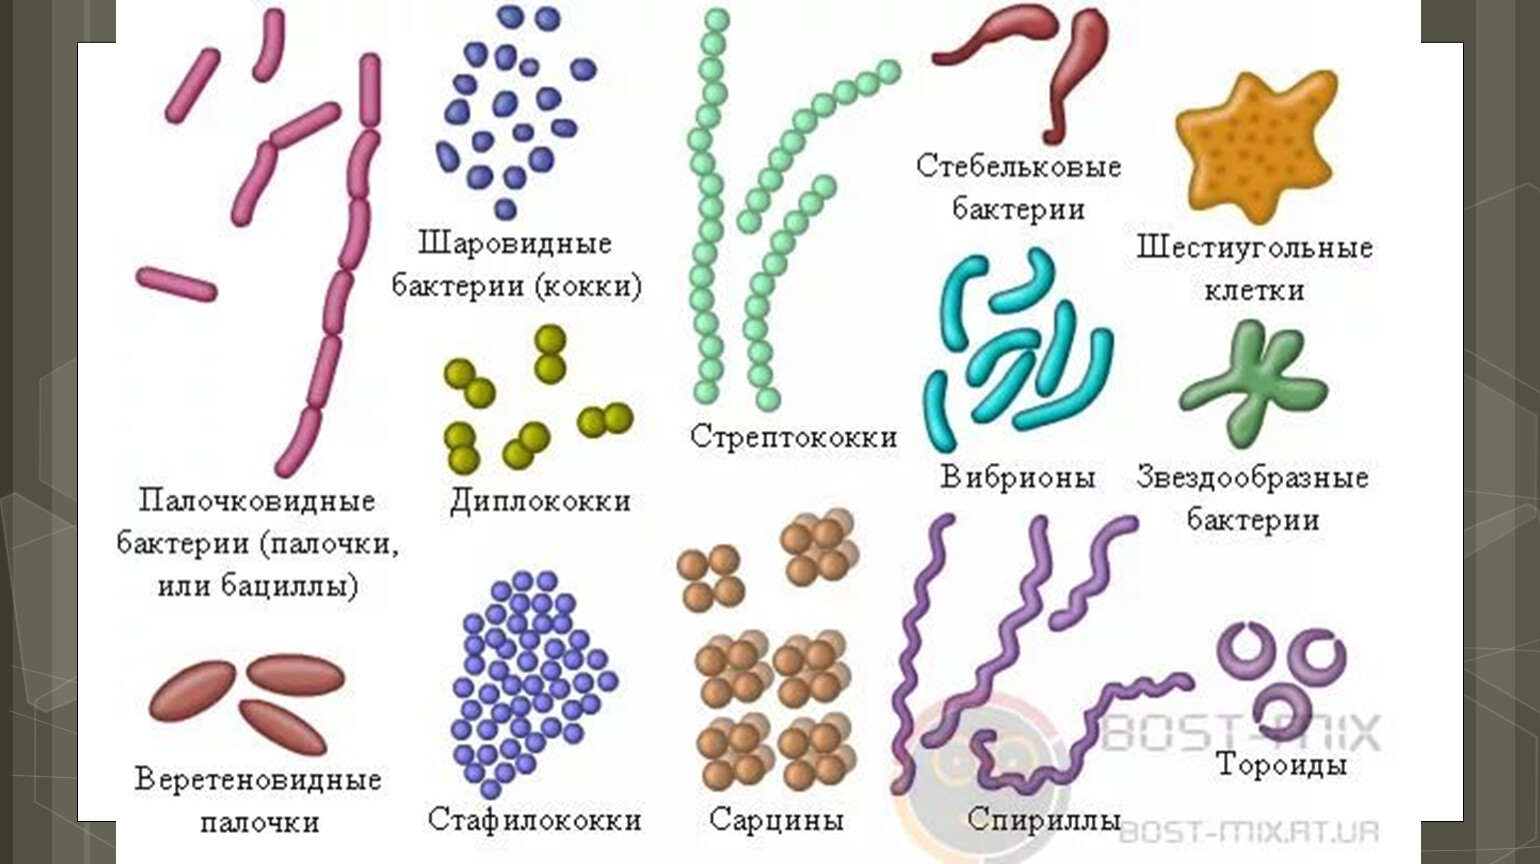 Какие микроорганизмы существуют. Формы бактерий 9 класс биология. Бактерии названия 2 класс бациллы. Формы бактериальных клеток кокки. Формы бактерий (кокковидные, палочковидные, извитые)..